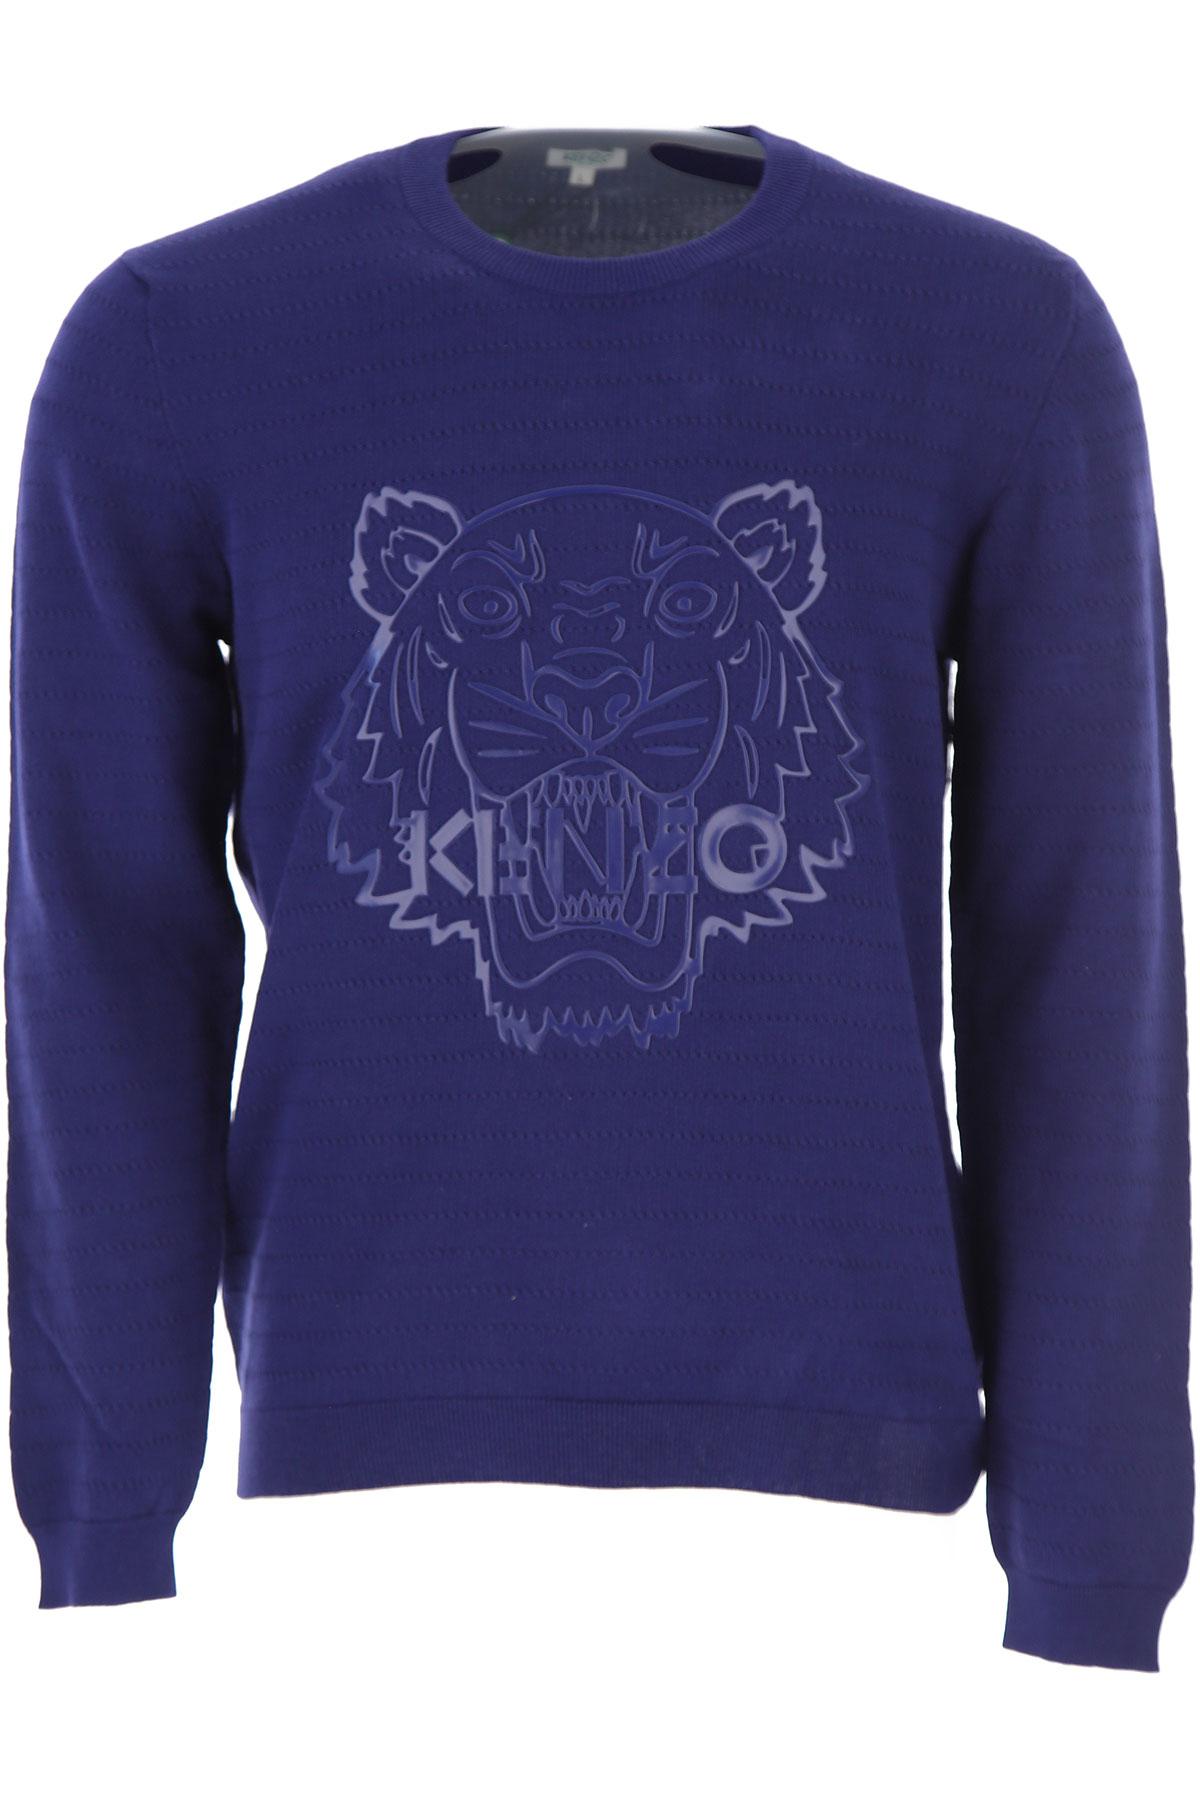 KENZO Cotton Sweater For Men Jumper On Sale in Blue for Men - Lyst